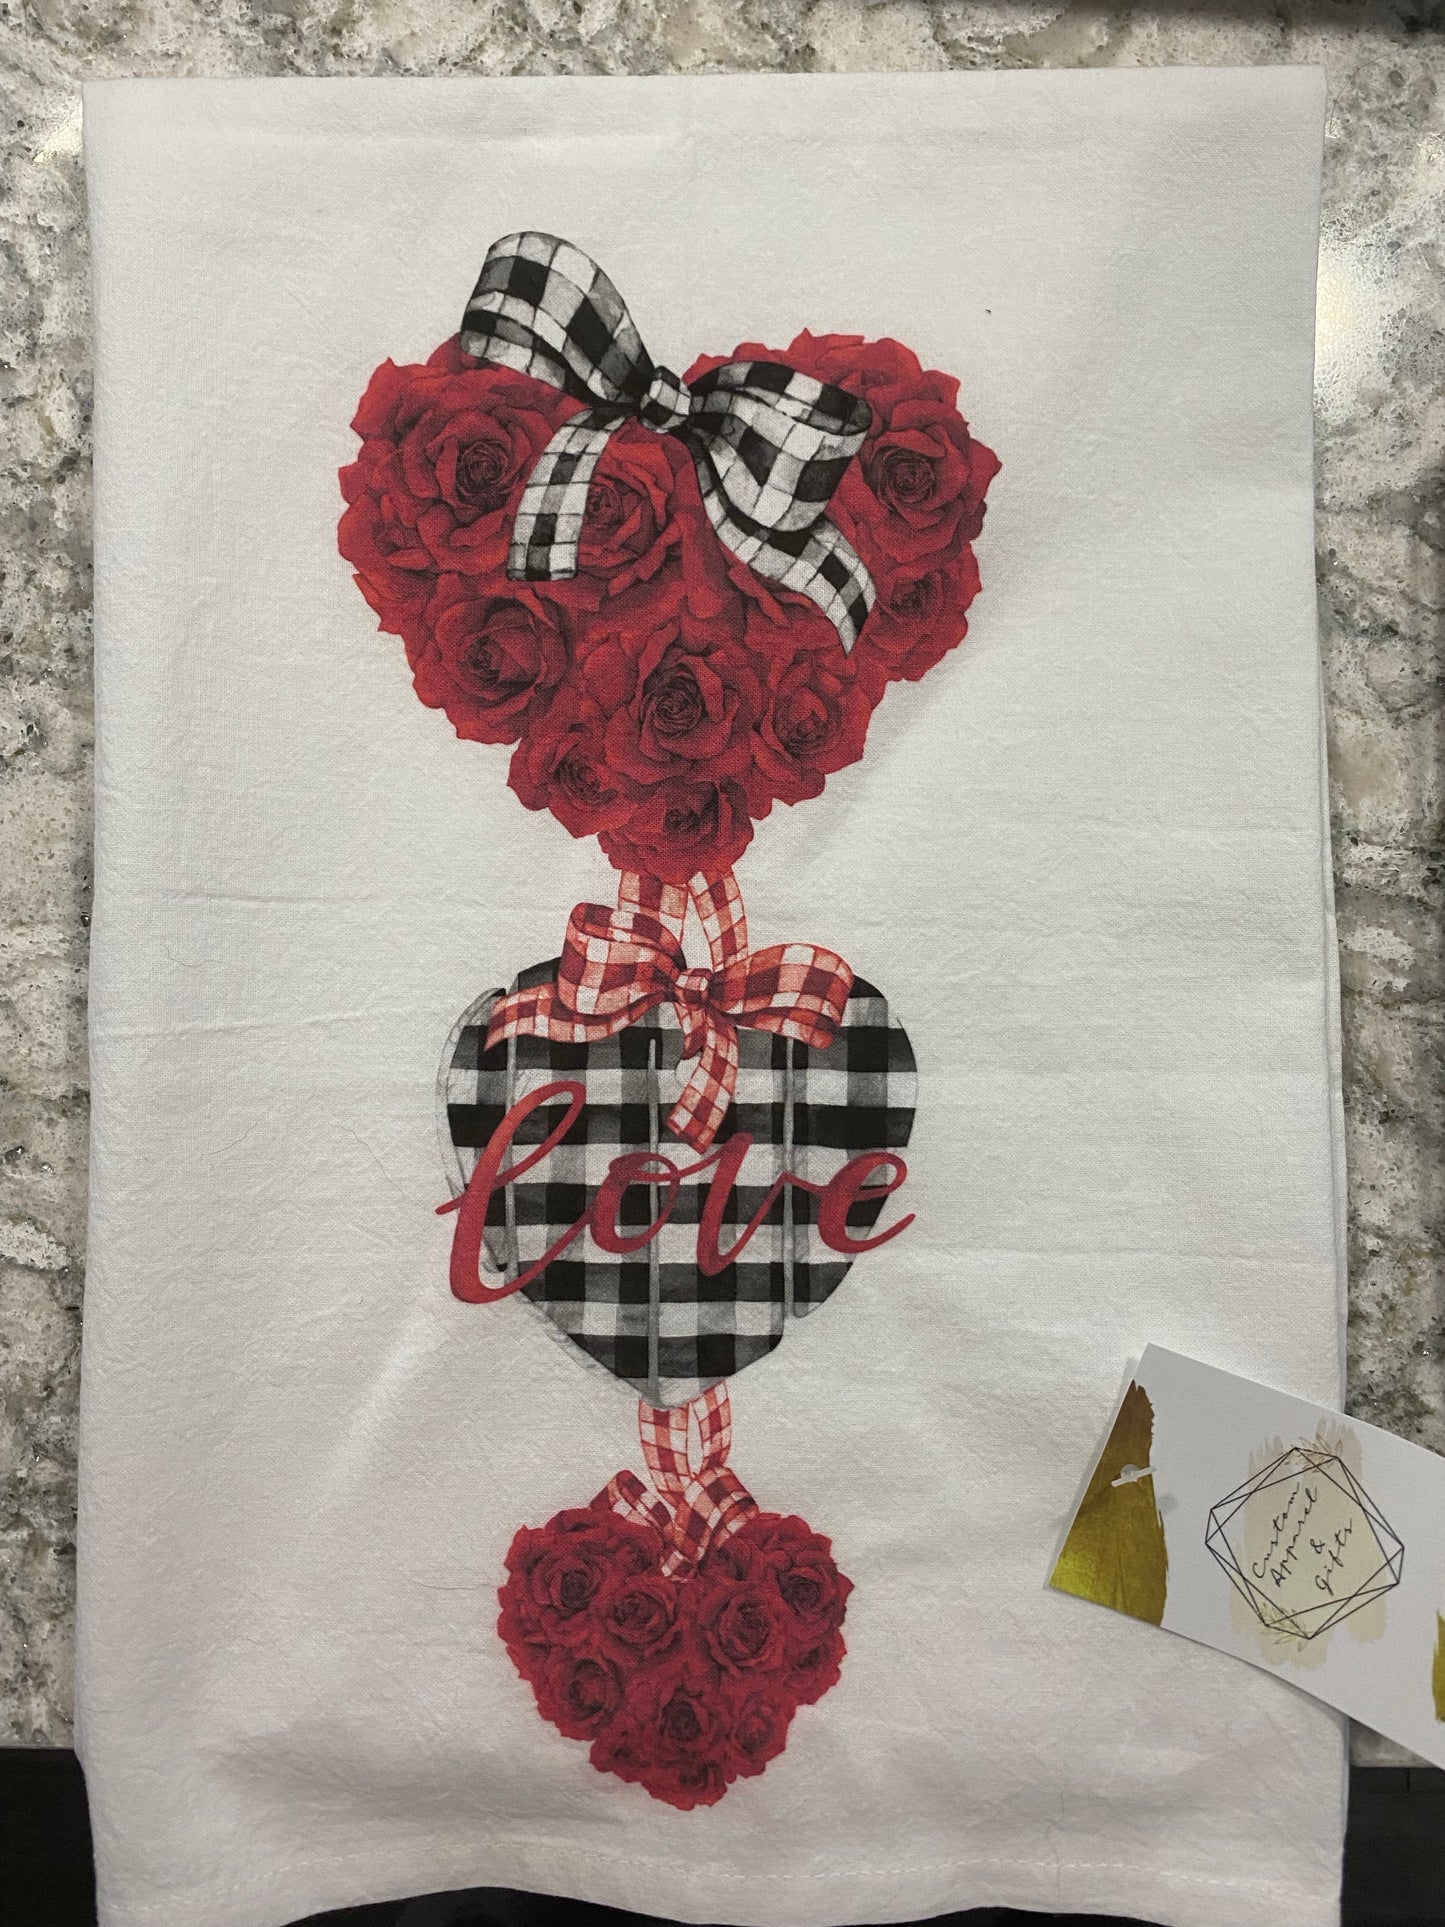 Valentine Heart Red Roses Flour Sack Cotton Tea Towels